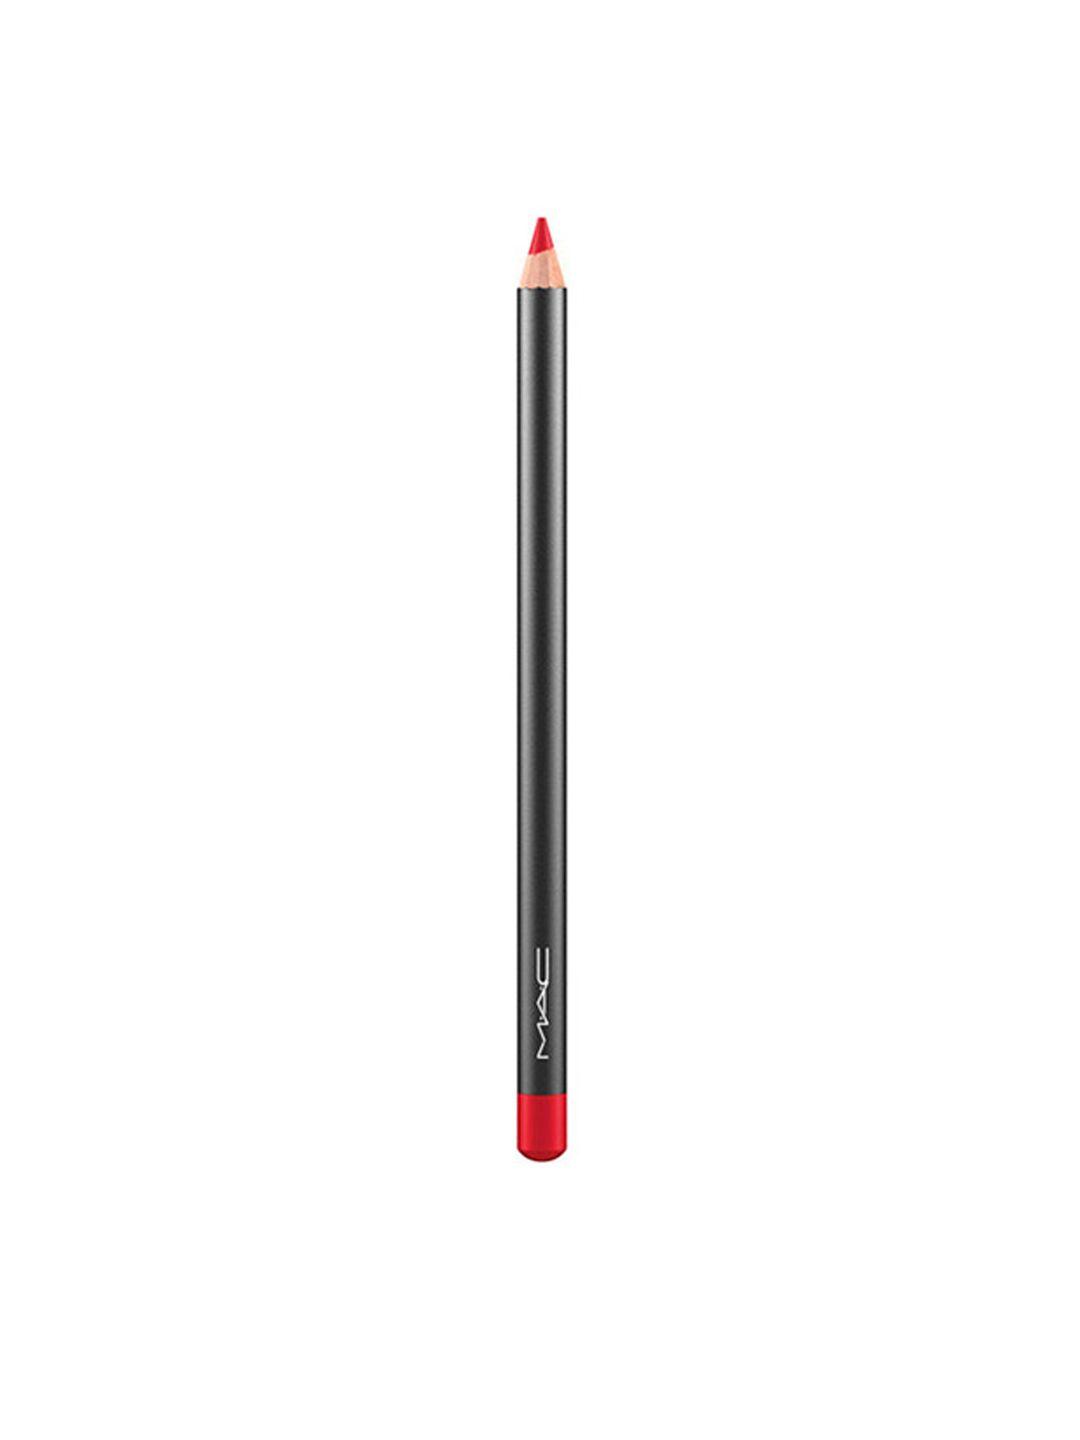 m.a.c longwear tansfer proof lip liner pencil - ruby woo 1.45 g